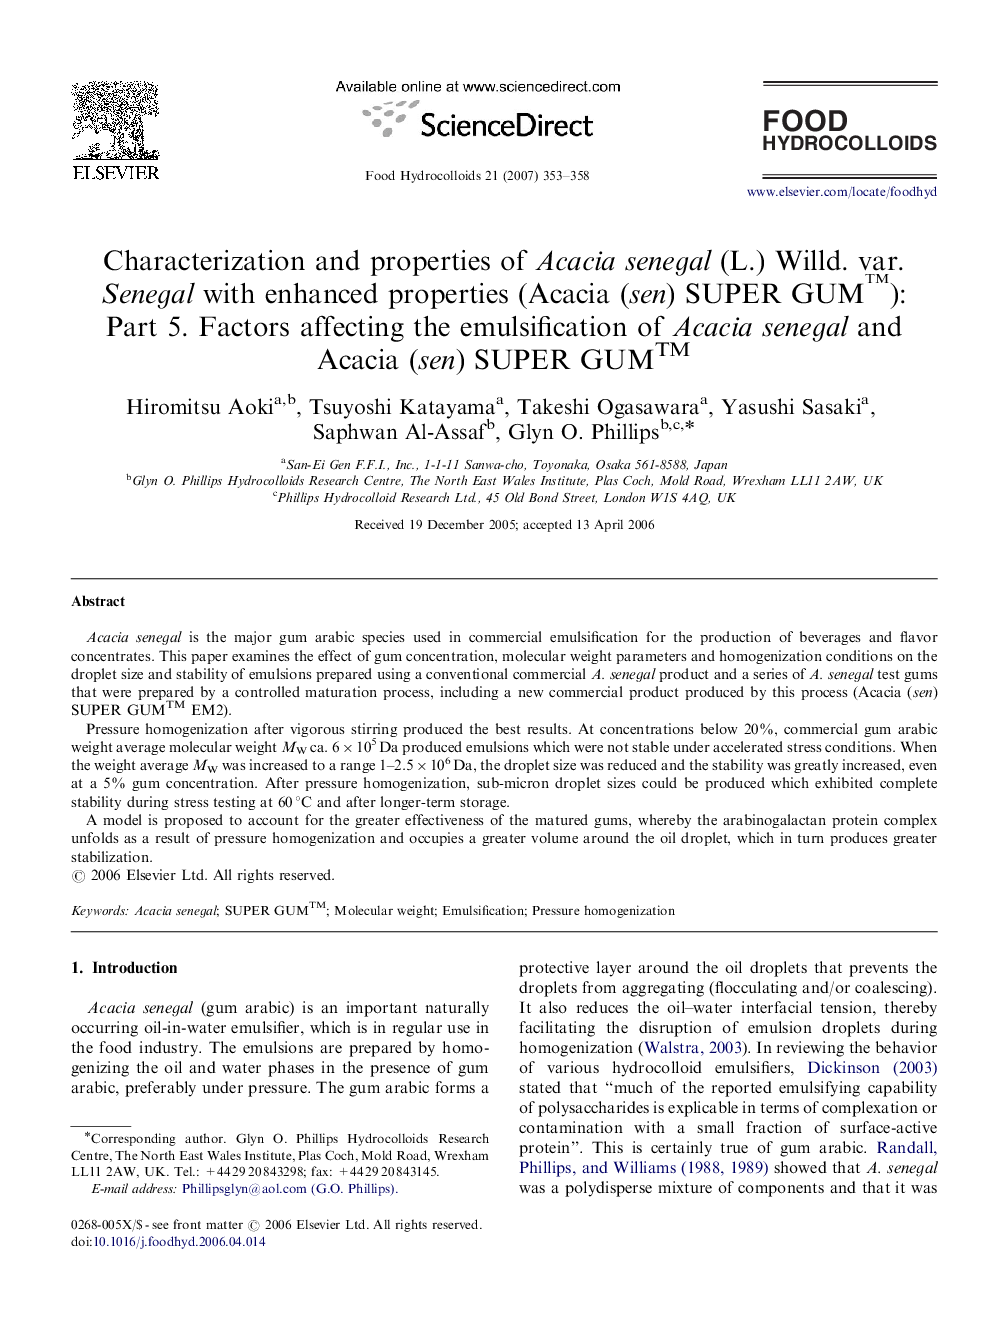 Characterization and properties of Acacia senegal (L.) Willd. var. Senegal with enhanced properties (Acacia (sen) SUPER GUM™): Part 5. Factors affecting the emulsification of Acacia senegal and Acacia (sen) SUPER GUM™